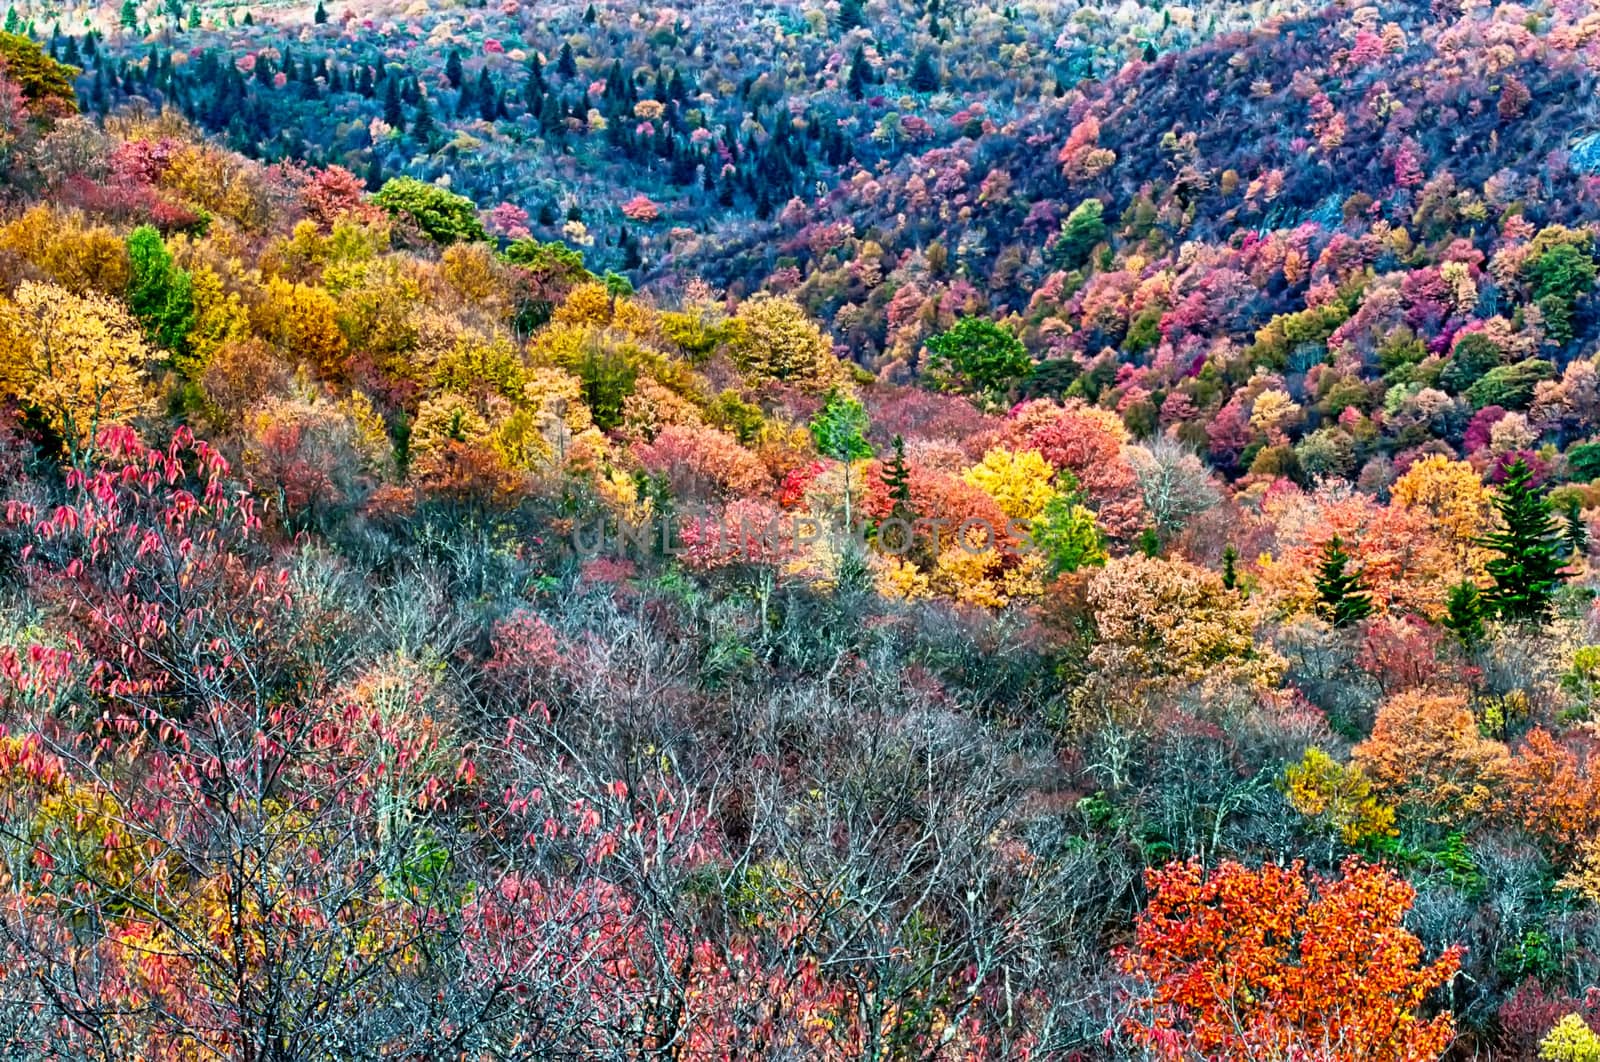 autumn drive on blue ridge parkway by digidreamgrafix